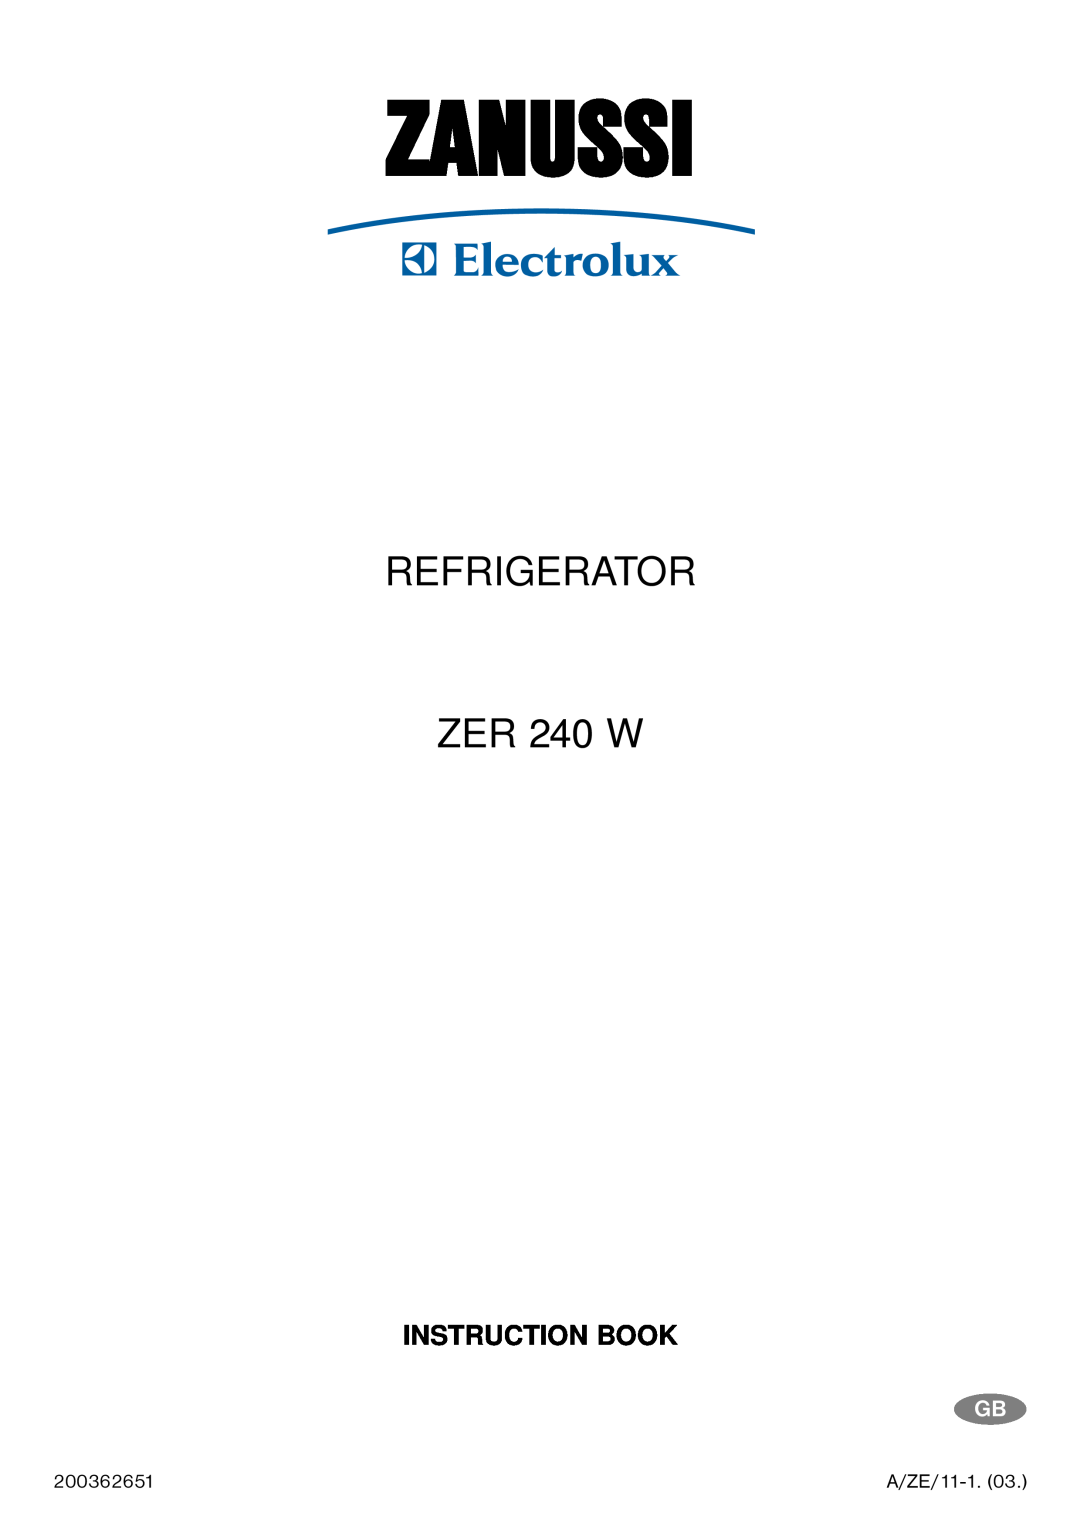 Zanussi manual Zanussi, REFRIGERATOR ZER 240 W, Instruction Book 